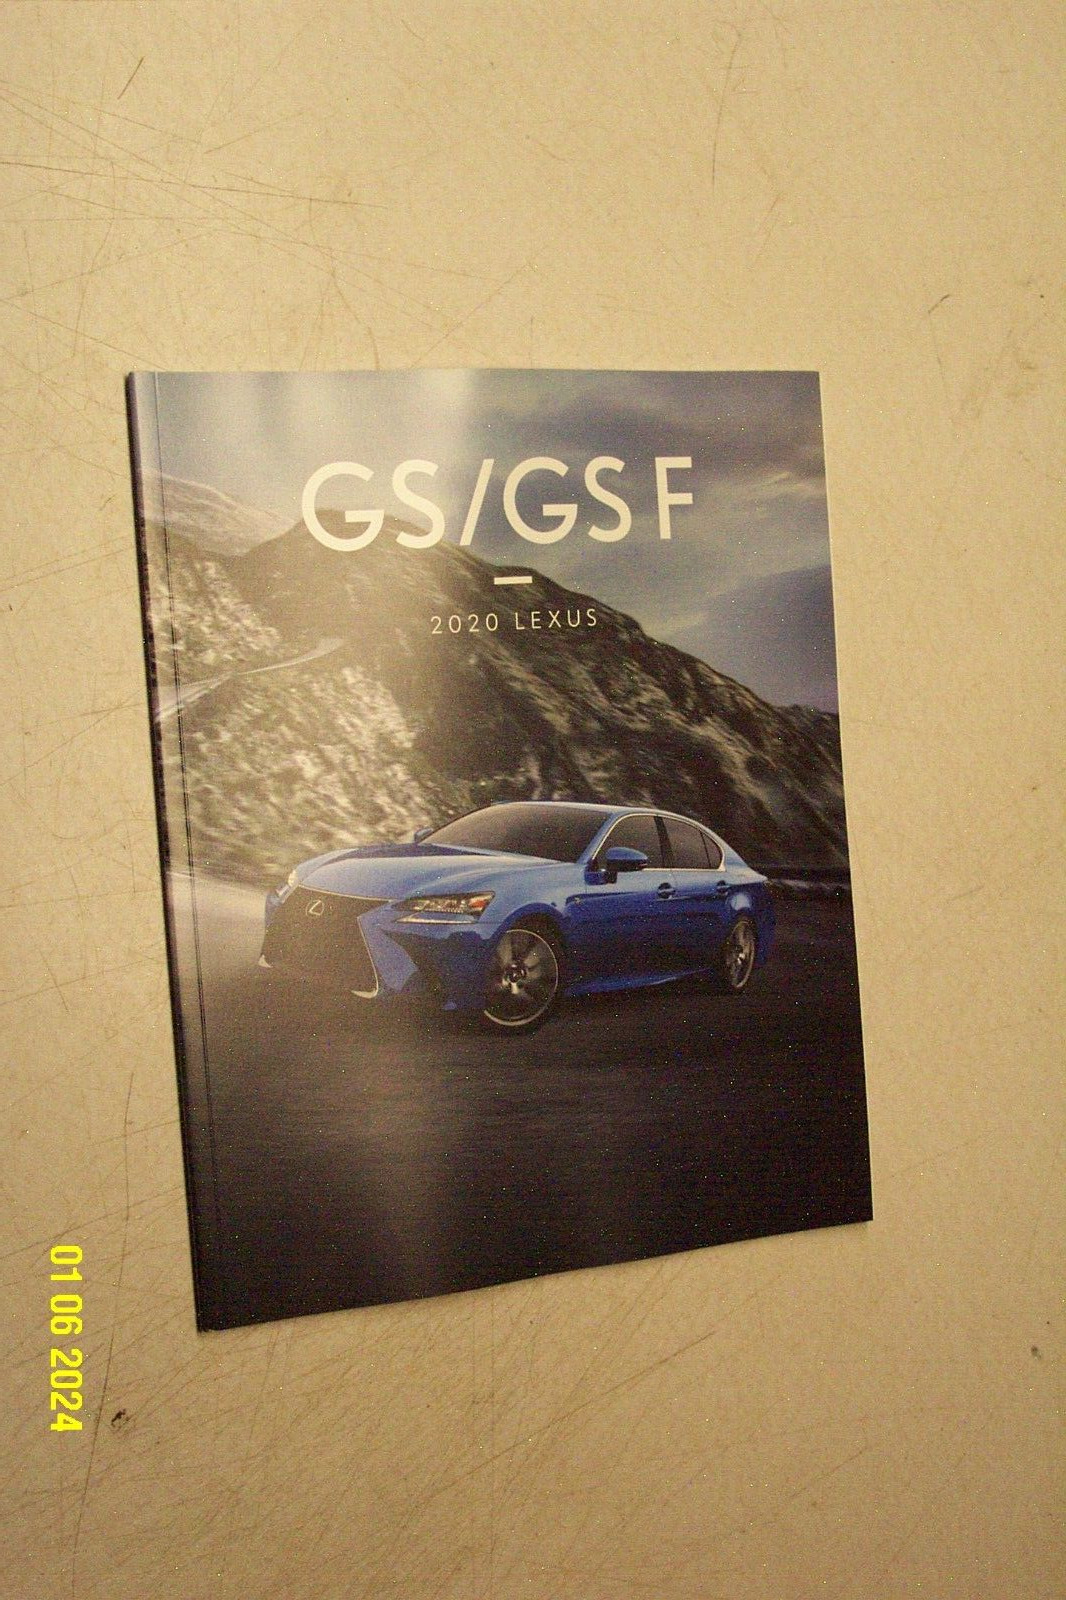 2020 LEXUS GS/GSF 48-page Original Sales Brochure